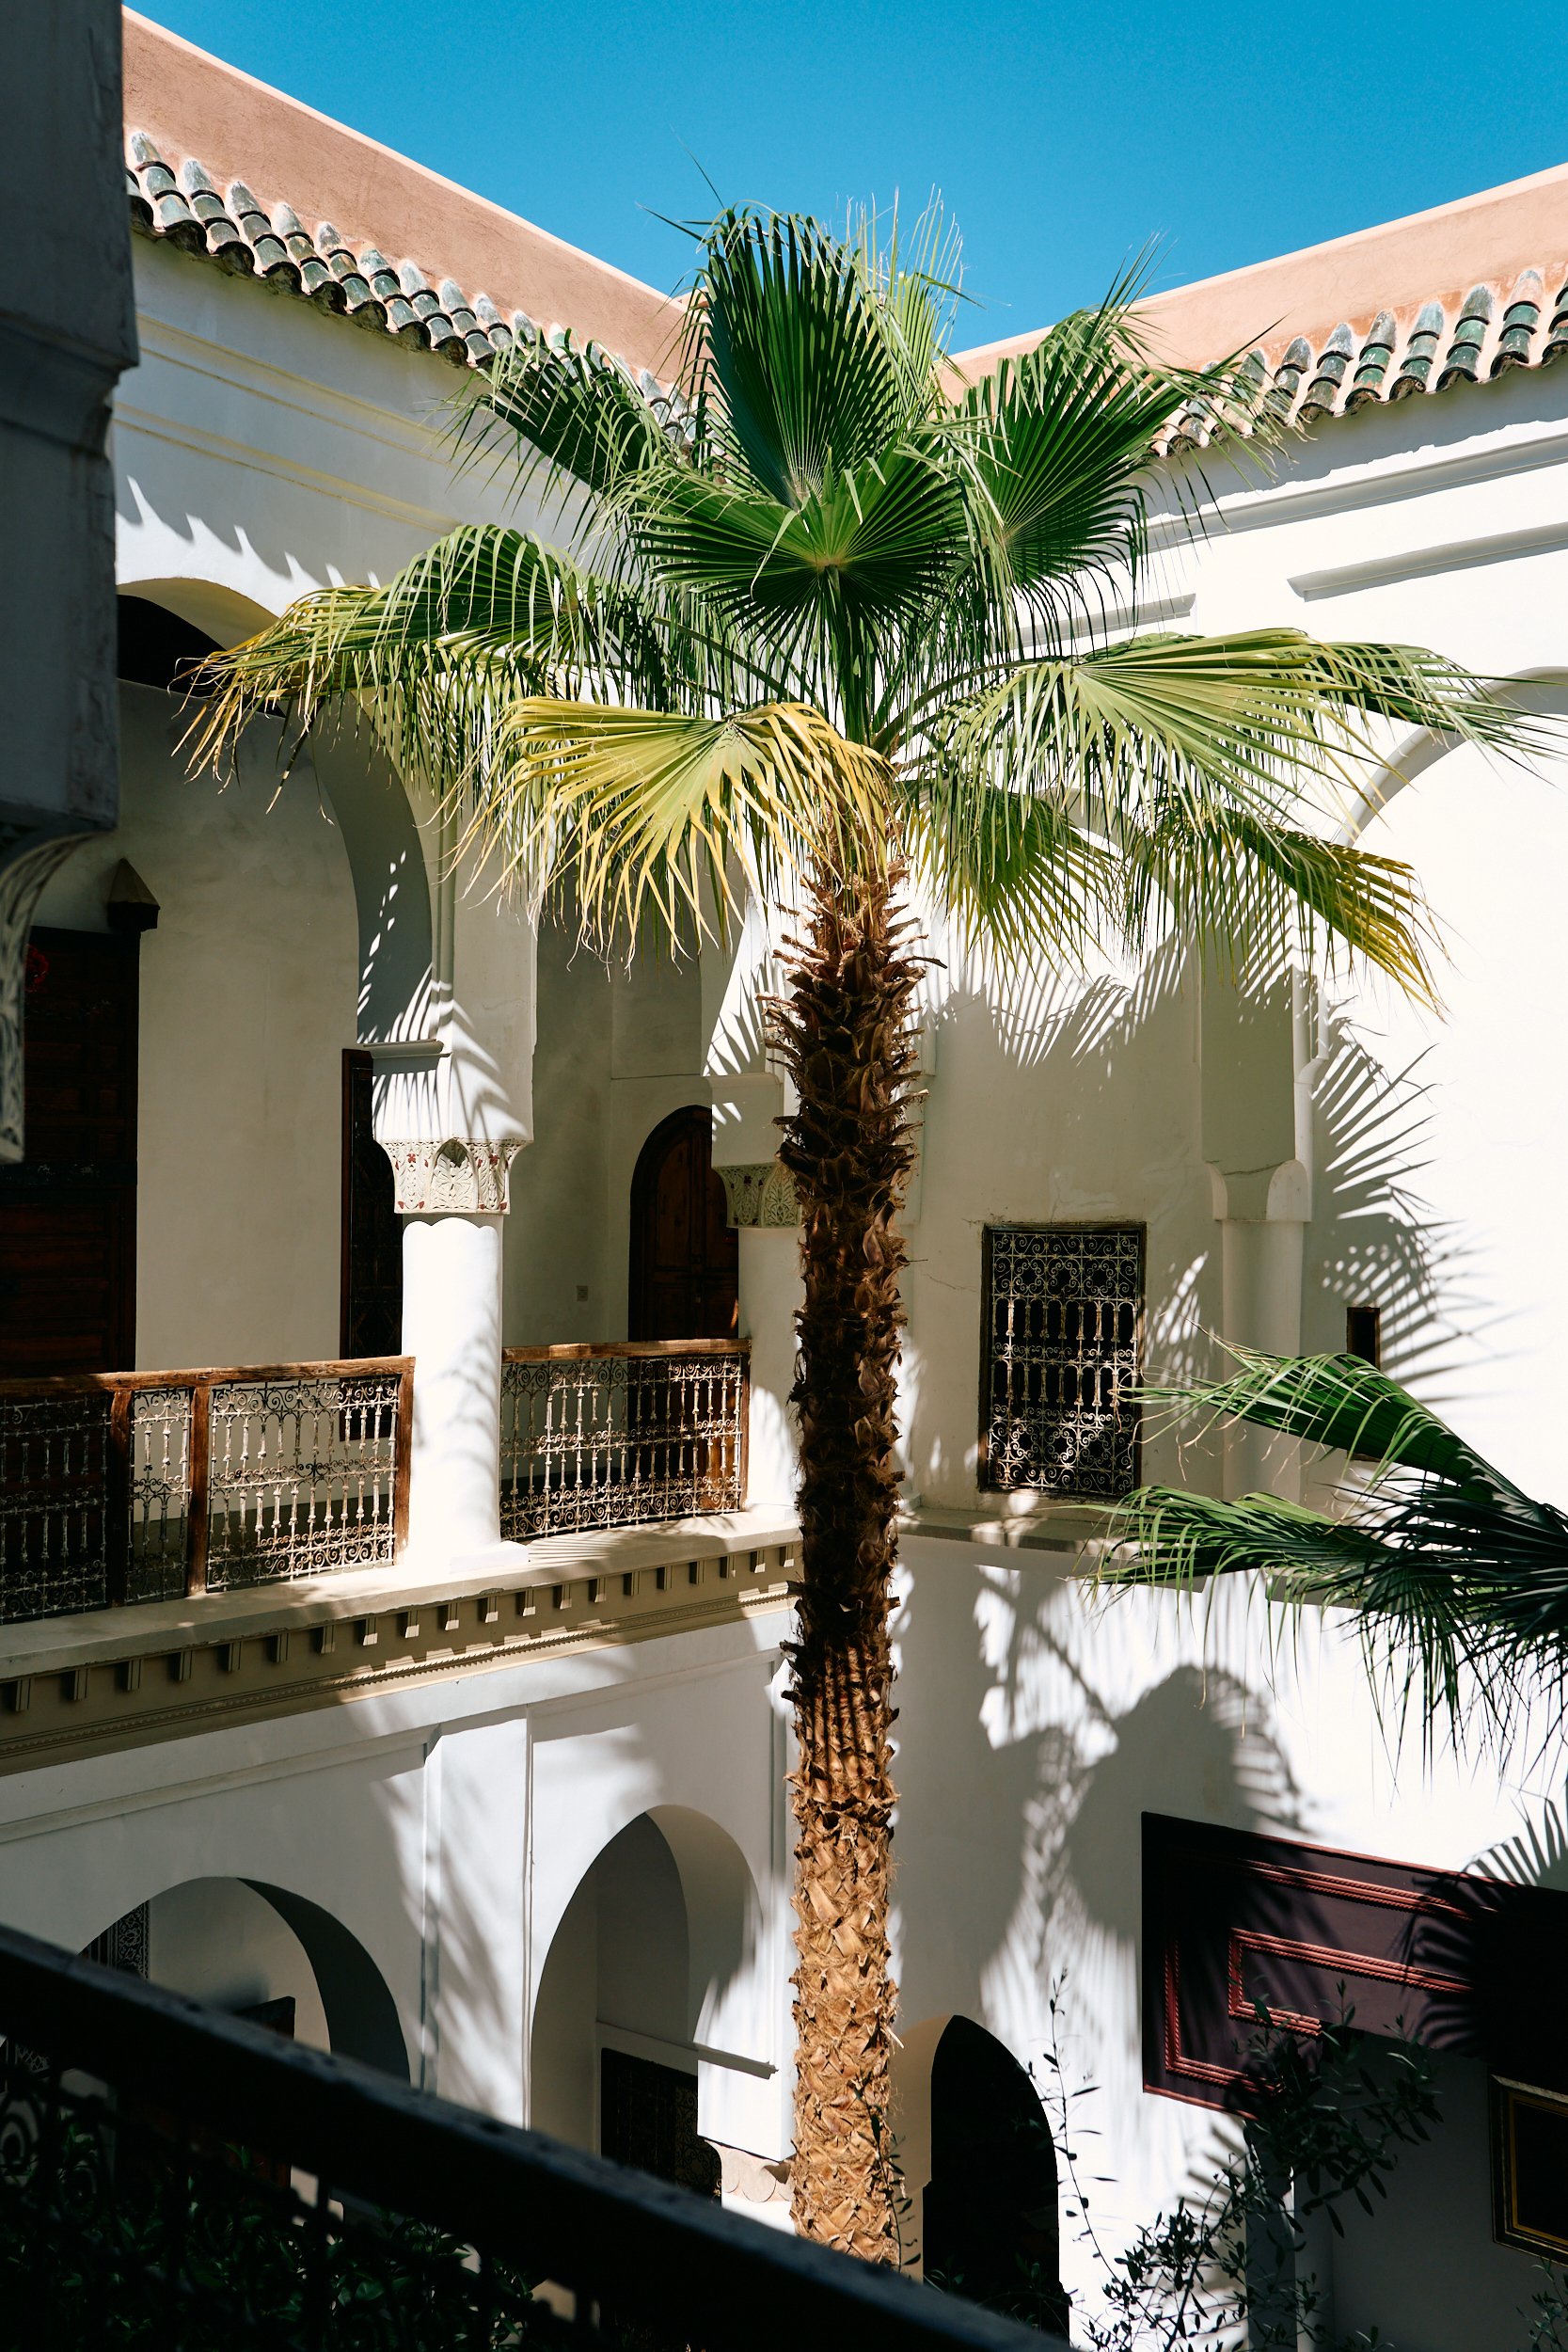 Palmboom in de binnenplaats van Riad Matham.